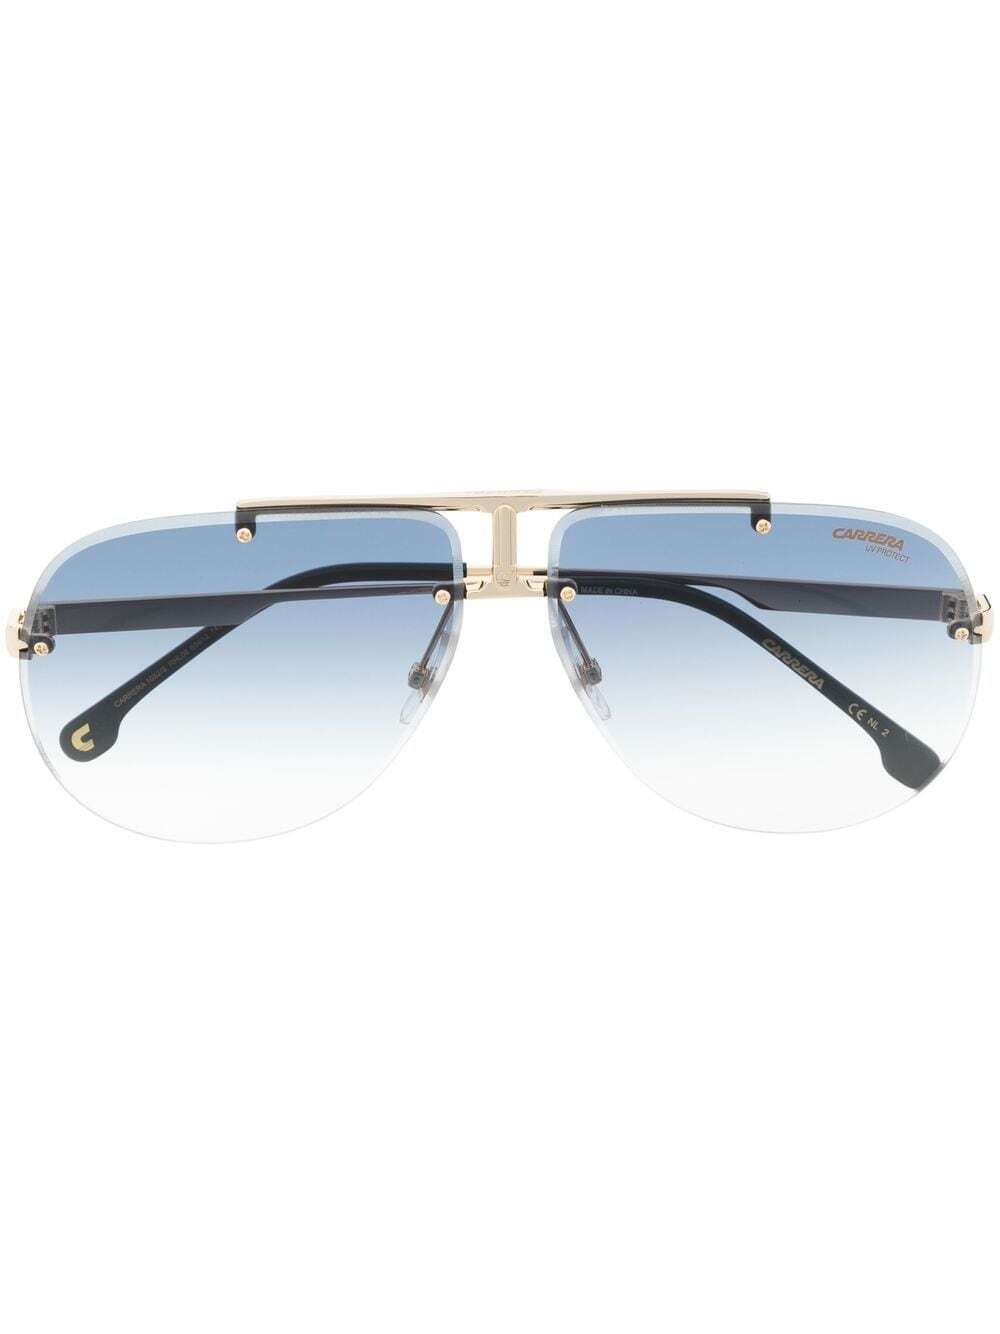 Carrera pilot-style sunglasses - Blue